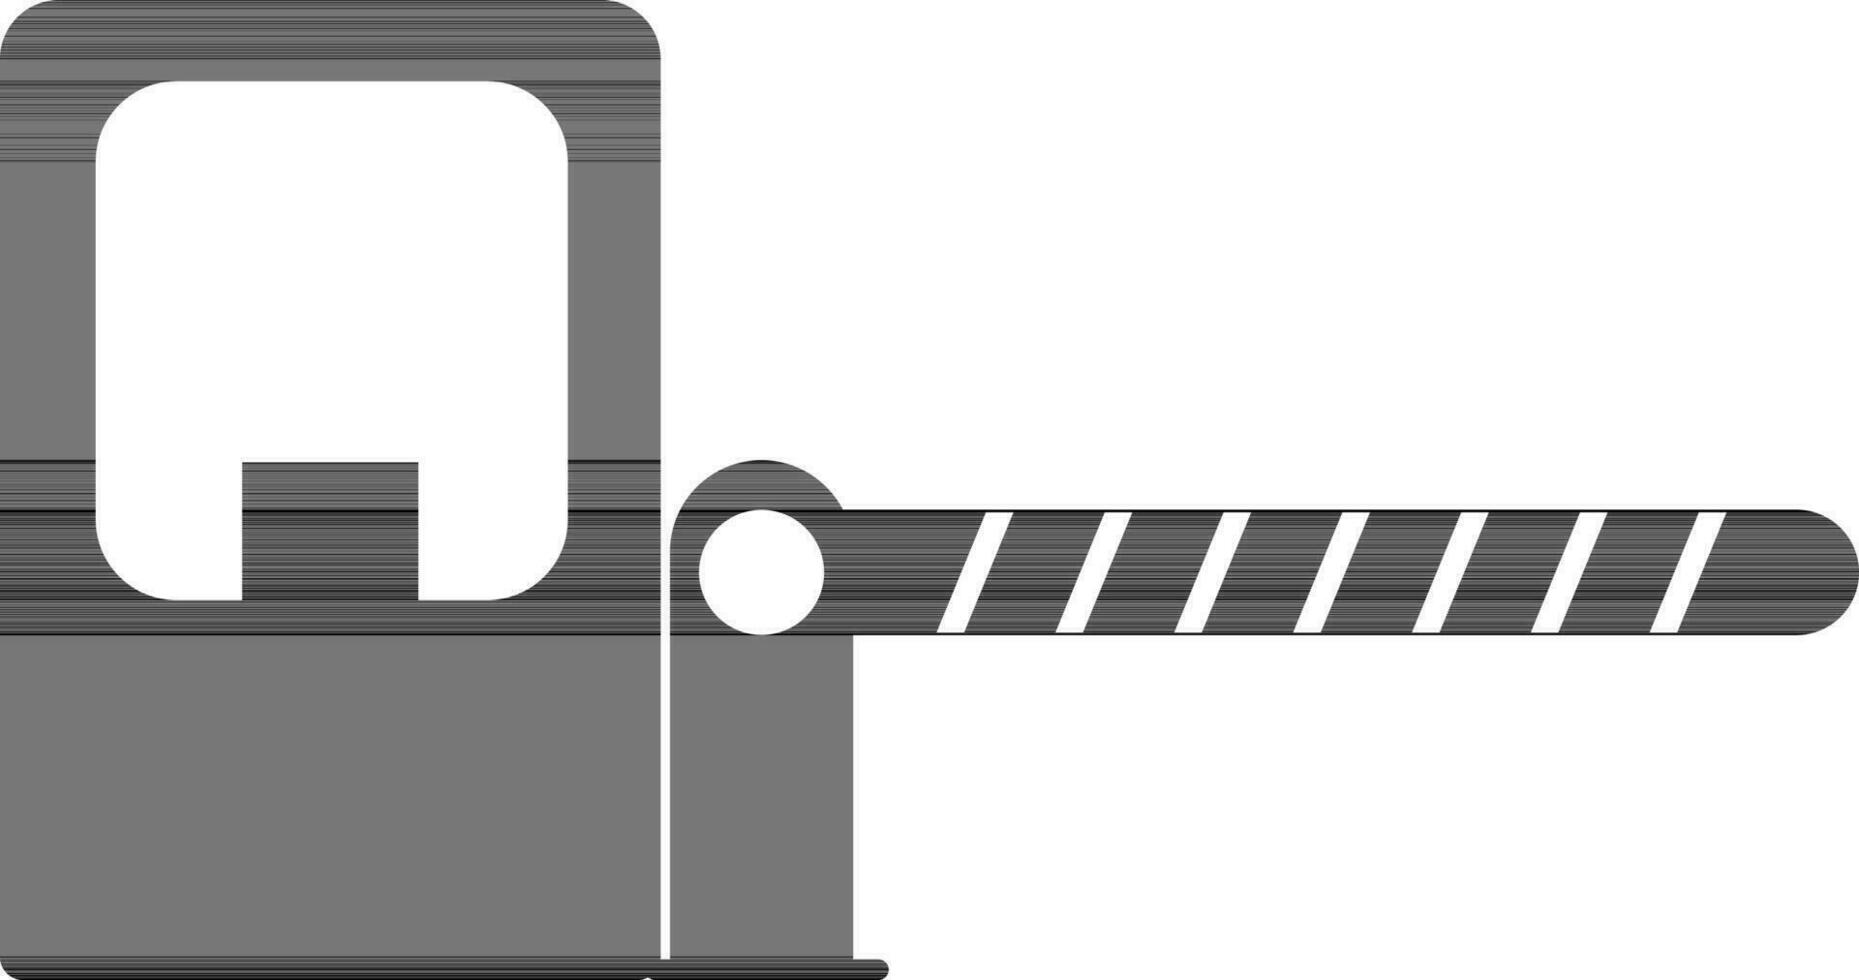 Traffic barrier glyph icon. vector